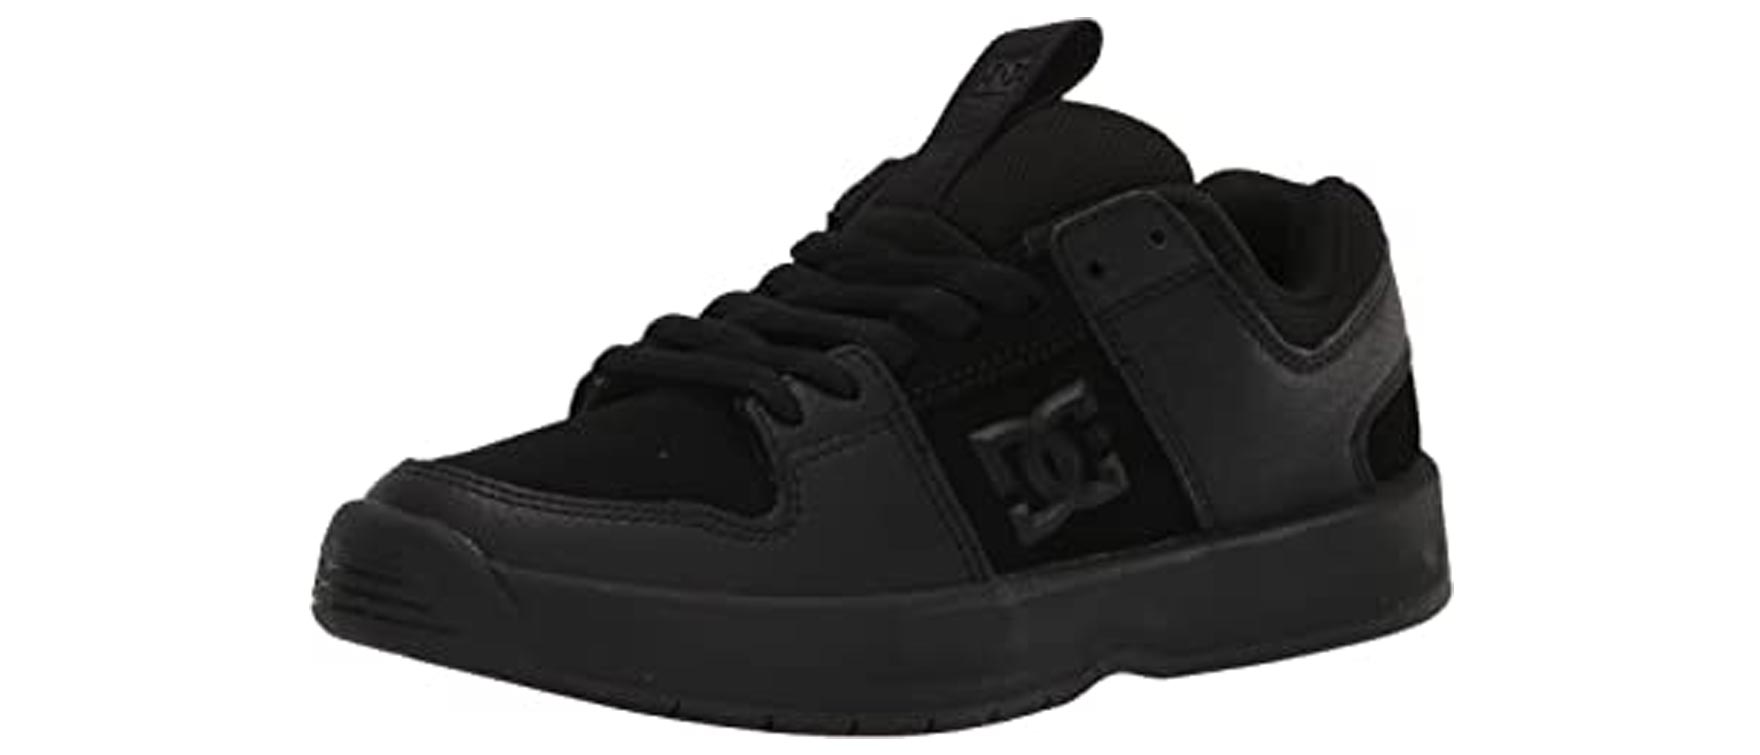 7. DC Men's Lynx Zero Casual Low Top Skate Shoe Sneaker